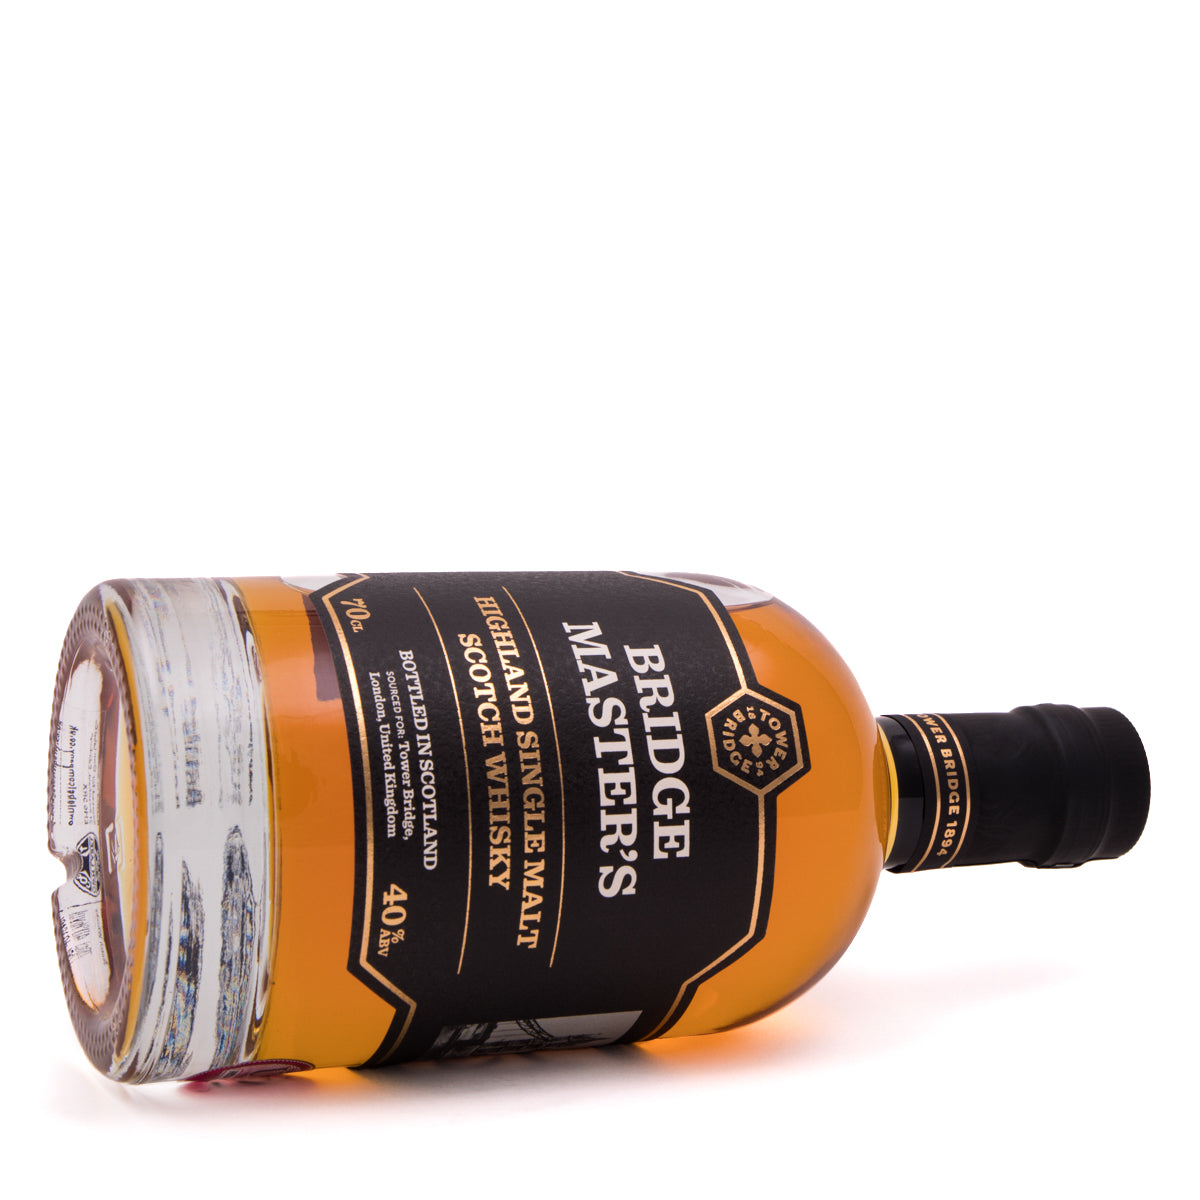 Bridge Master's Highland Single Malt Scotch Whisky 70cl - 5